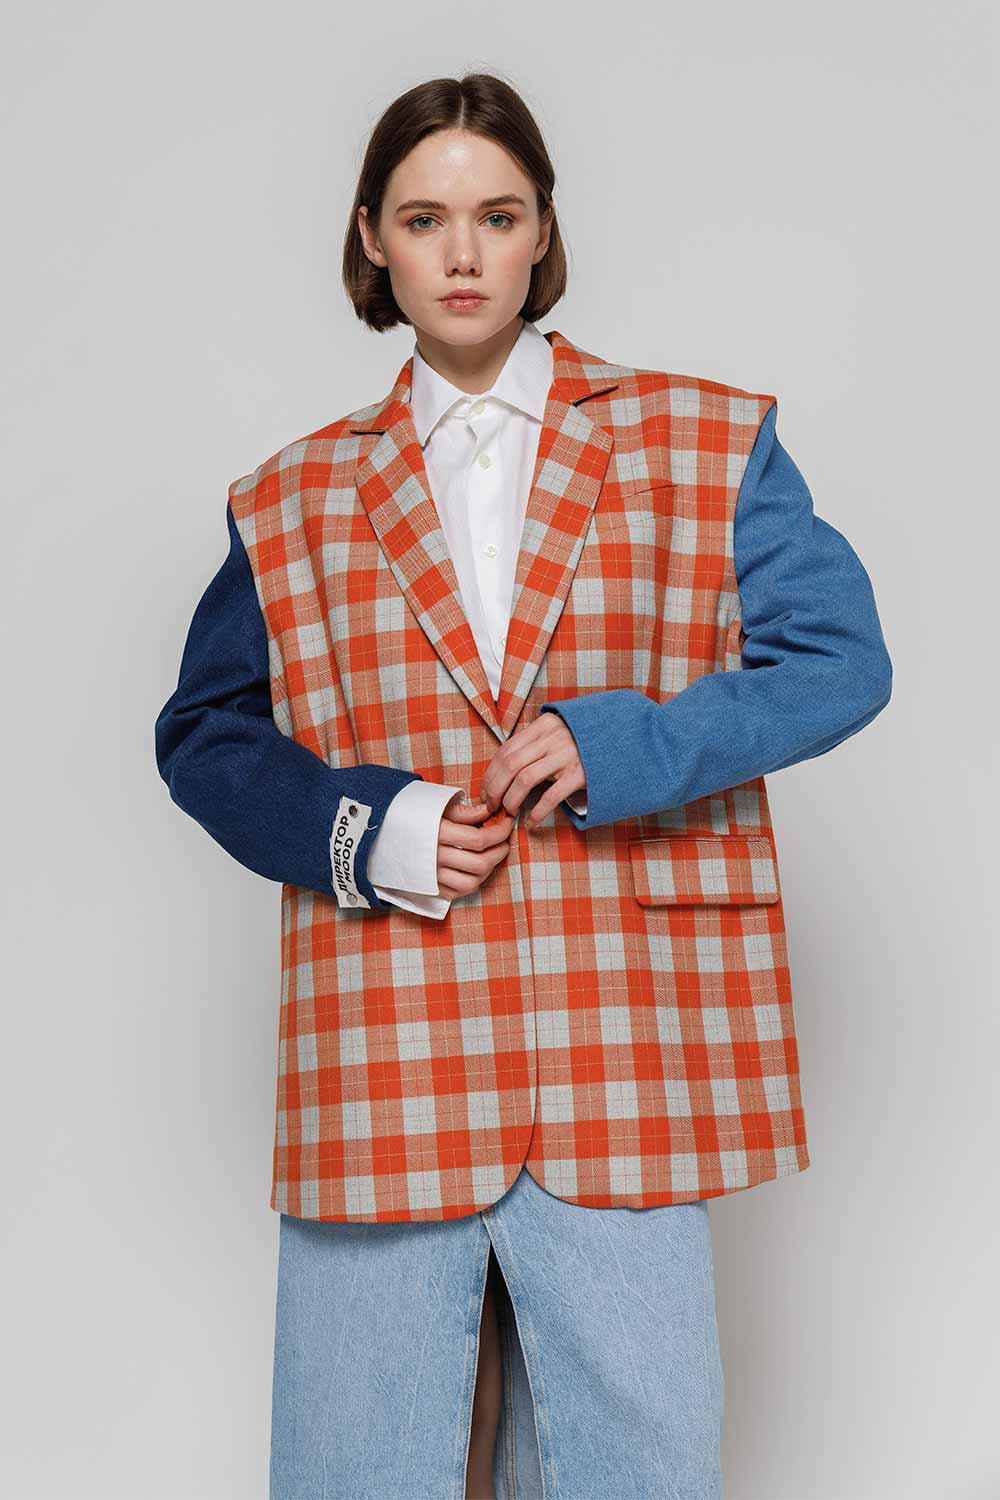 Crepe jacket-constructor with orange-blue checked body, denim sleeves. Blazer